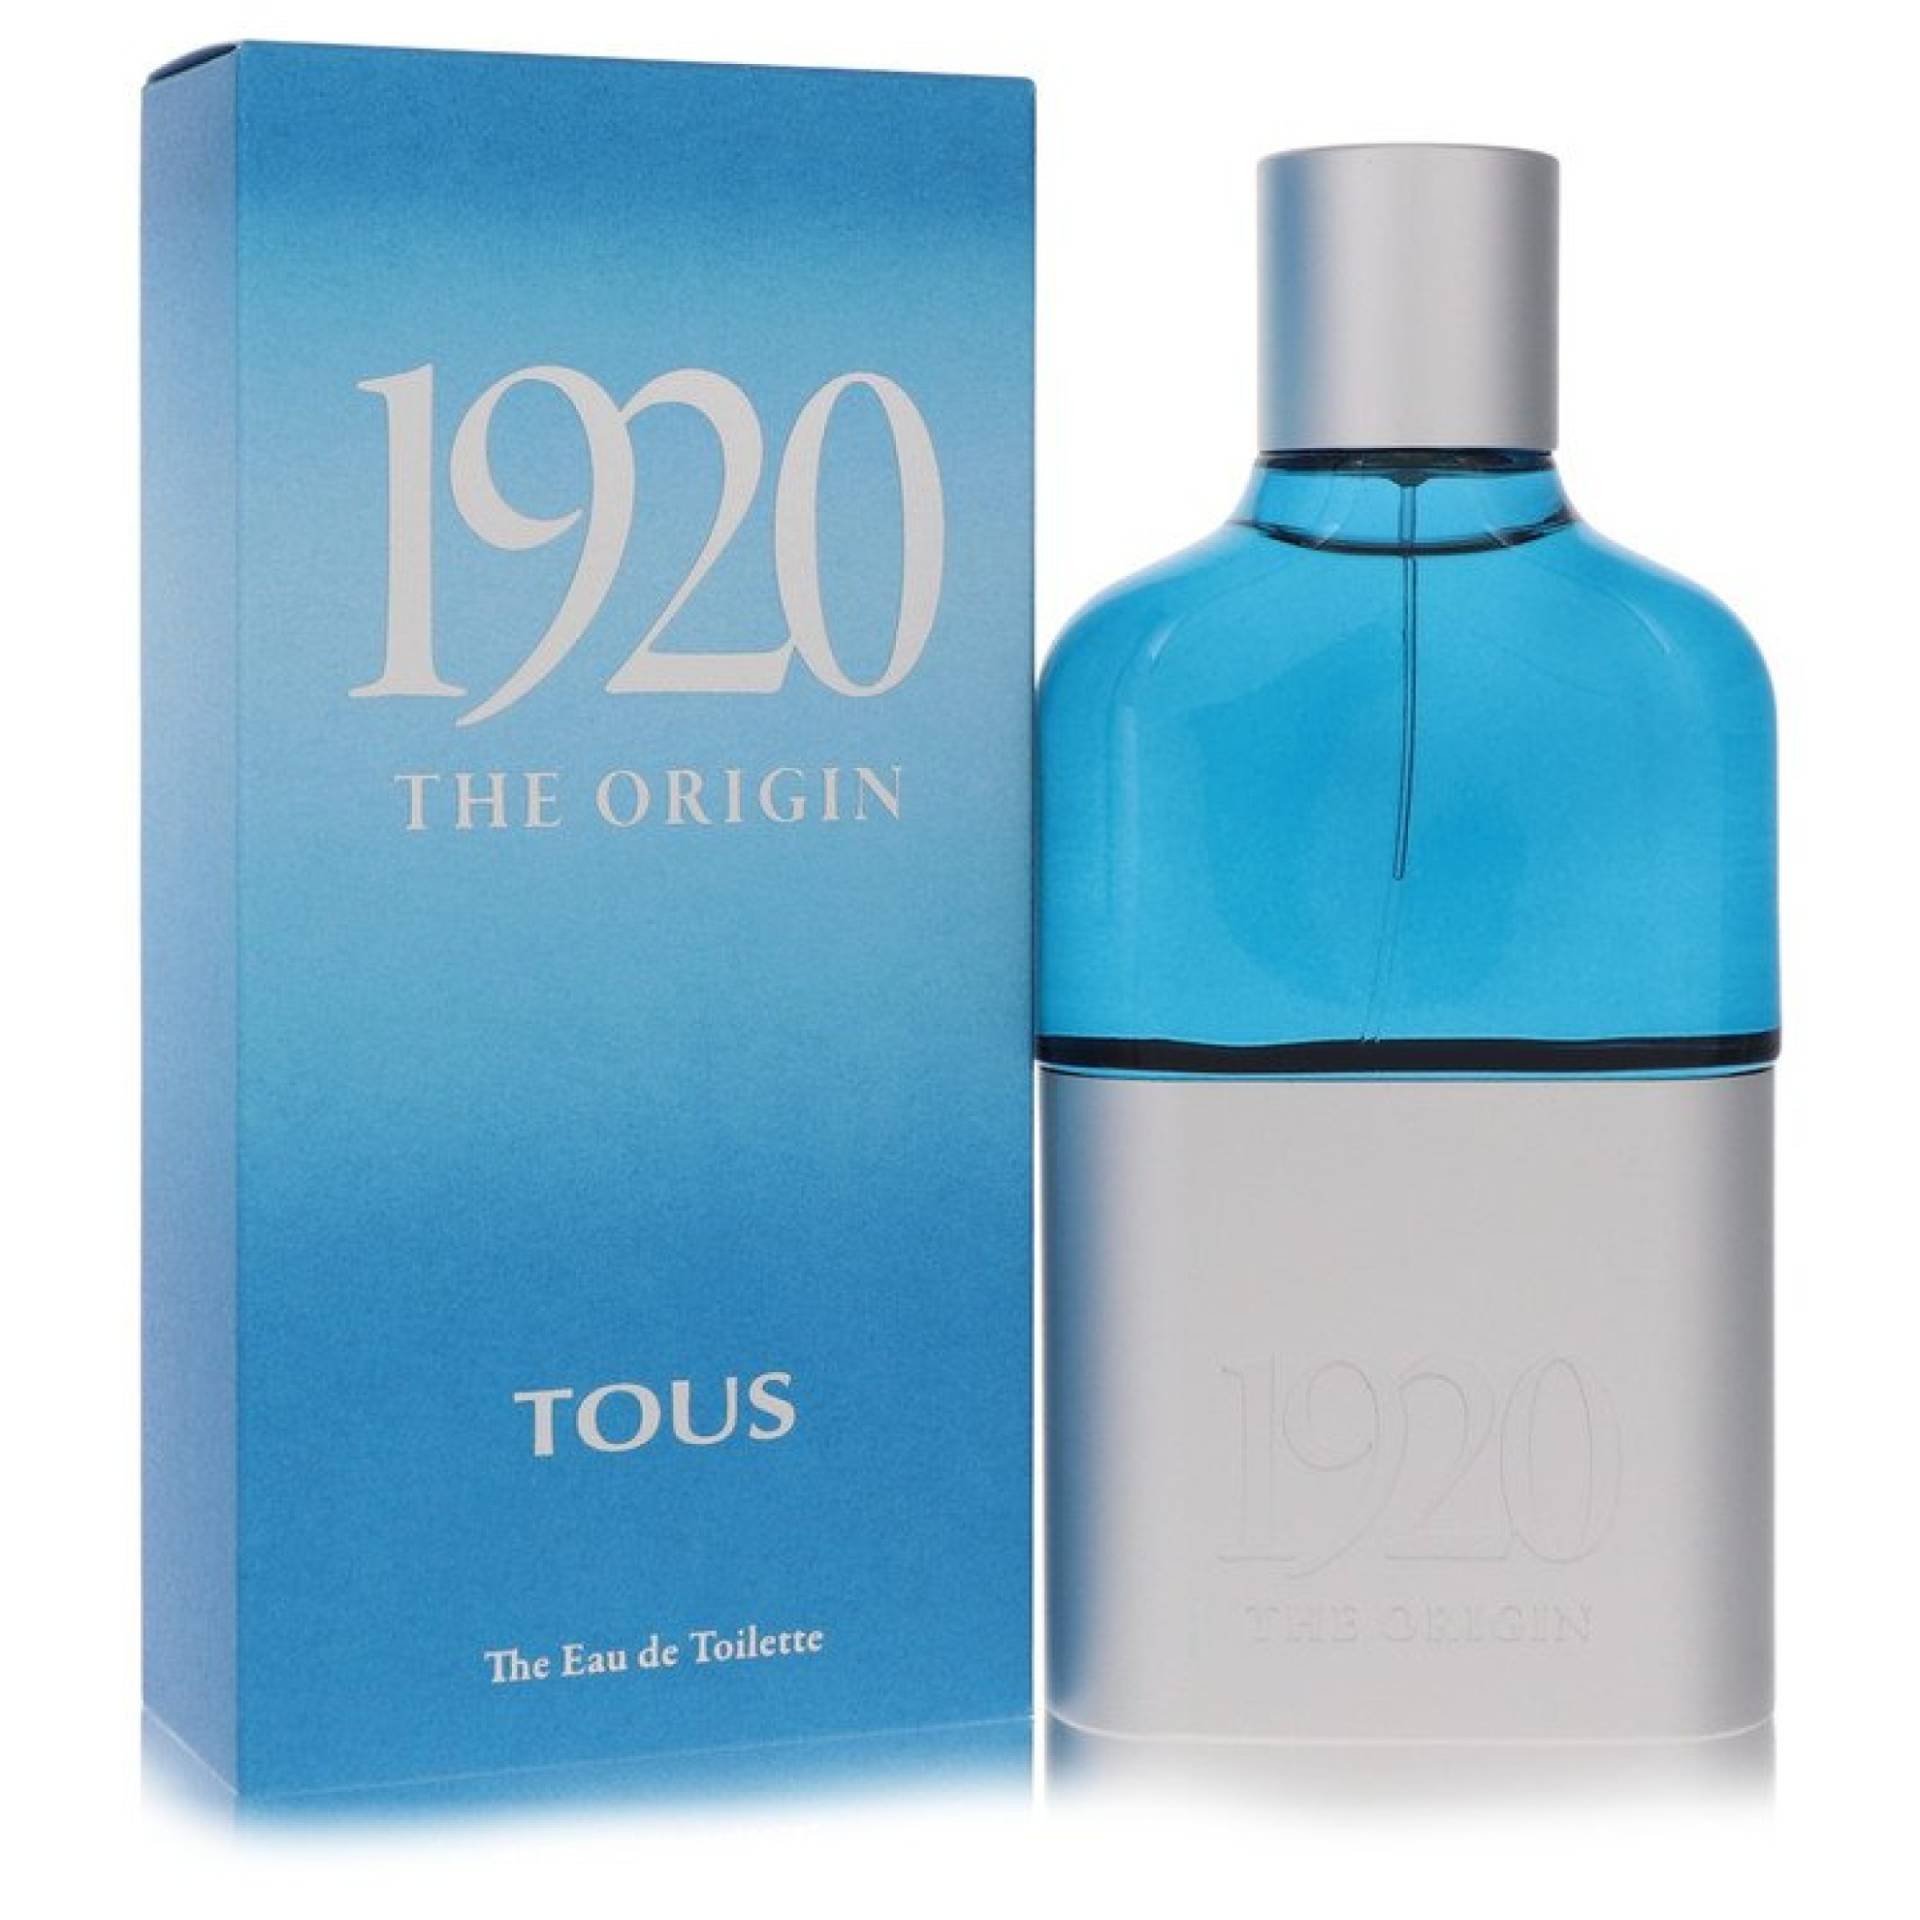 Tous 1920 The Origin Eau De Toilette Spray 100 ml von Tous